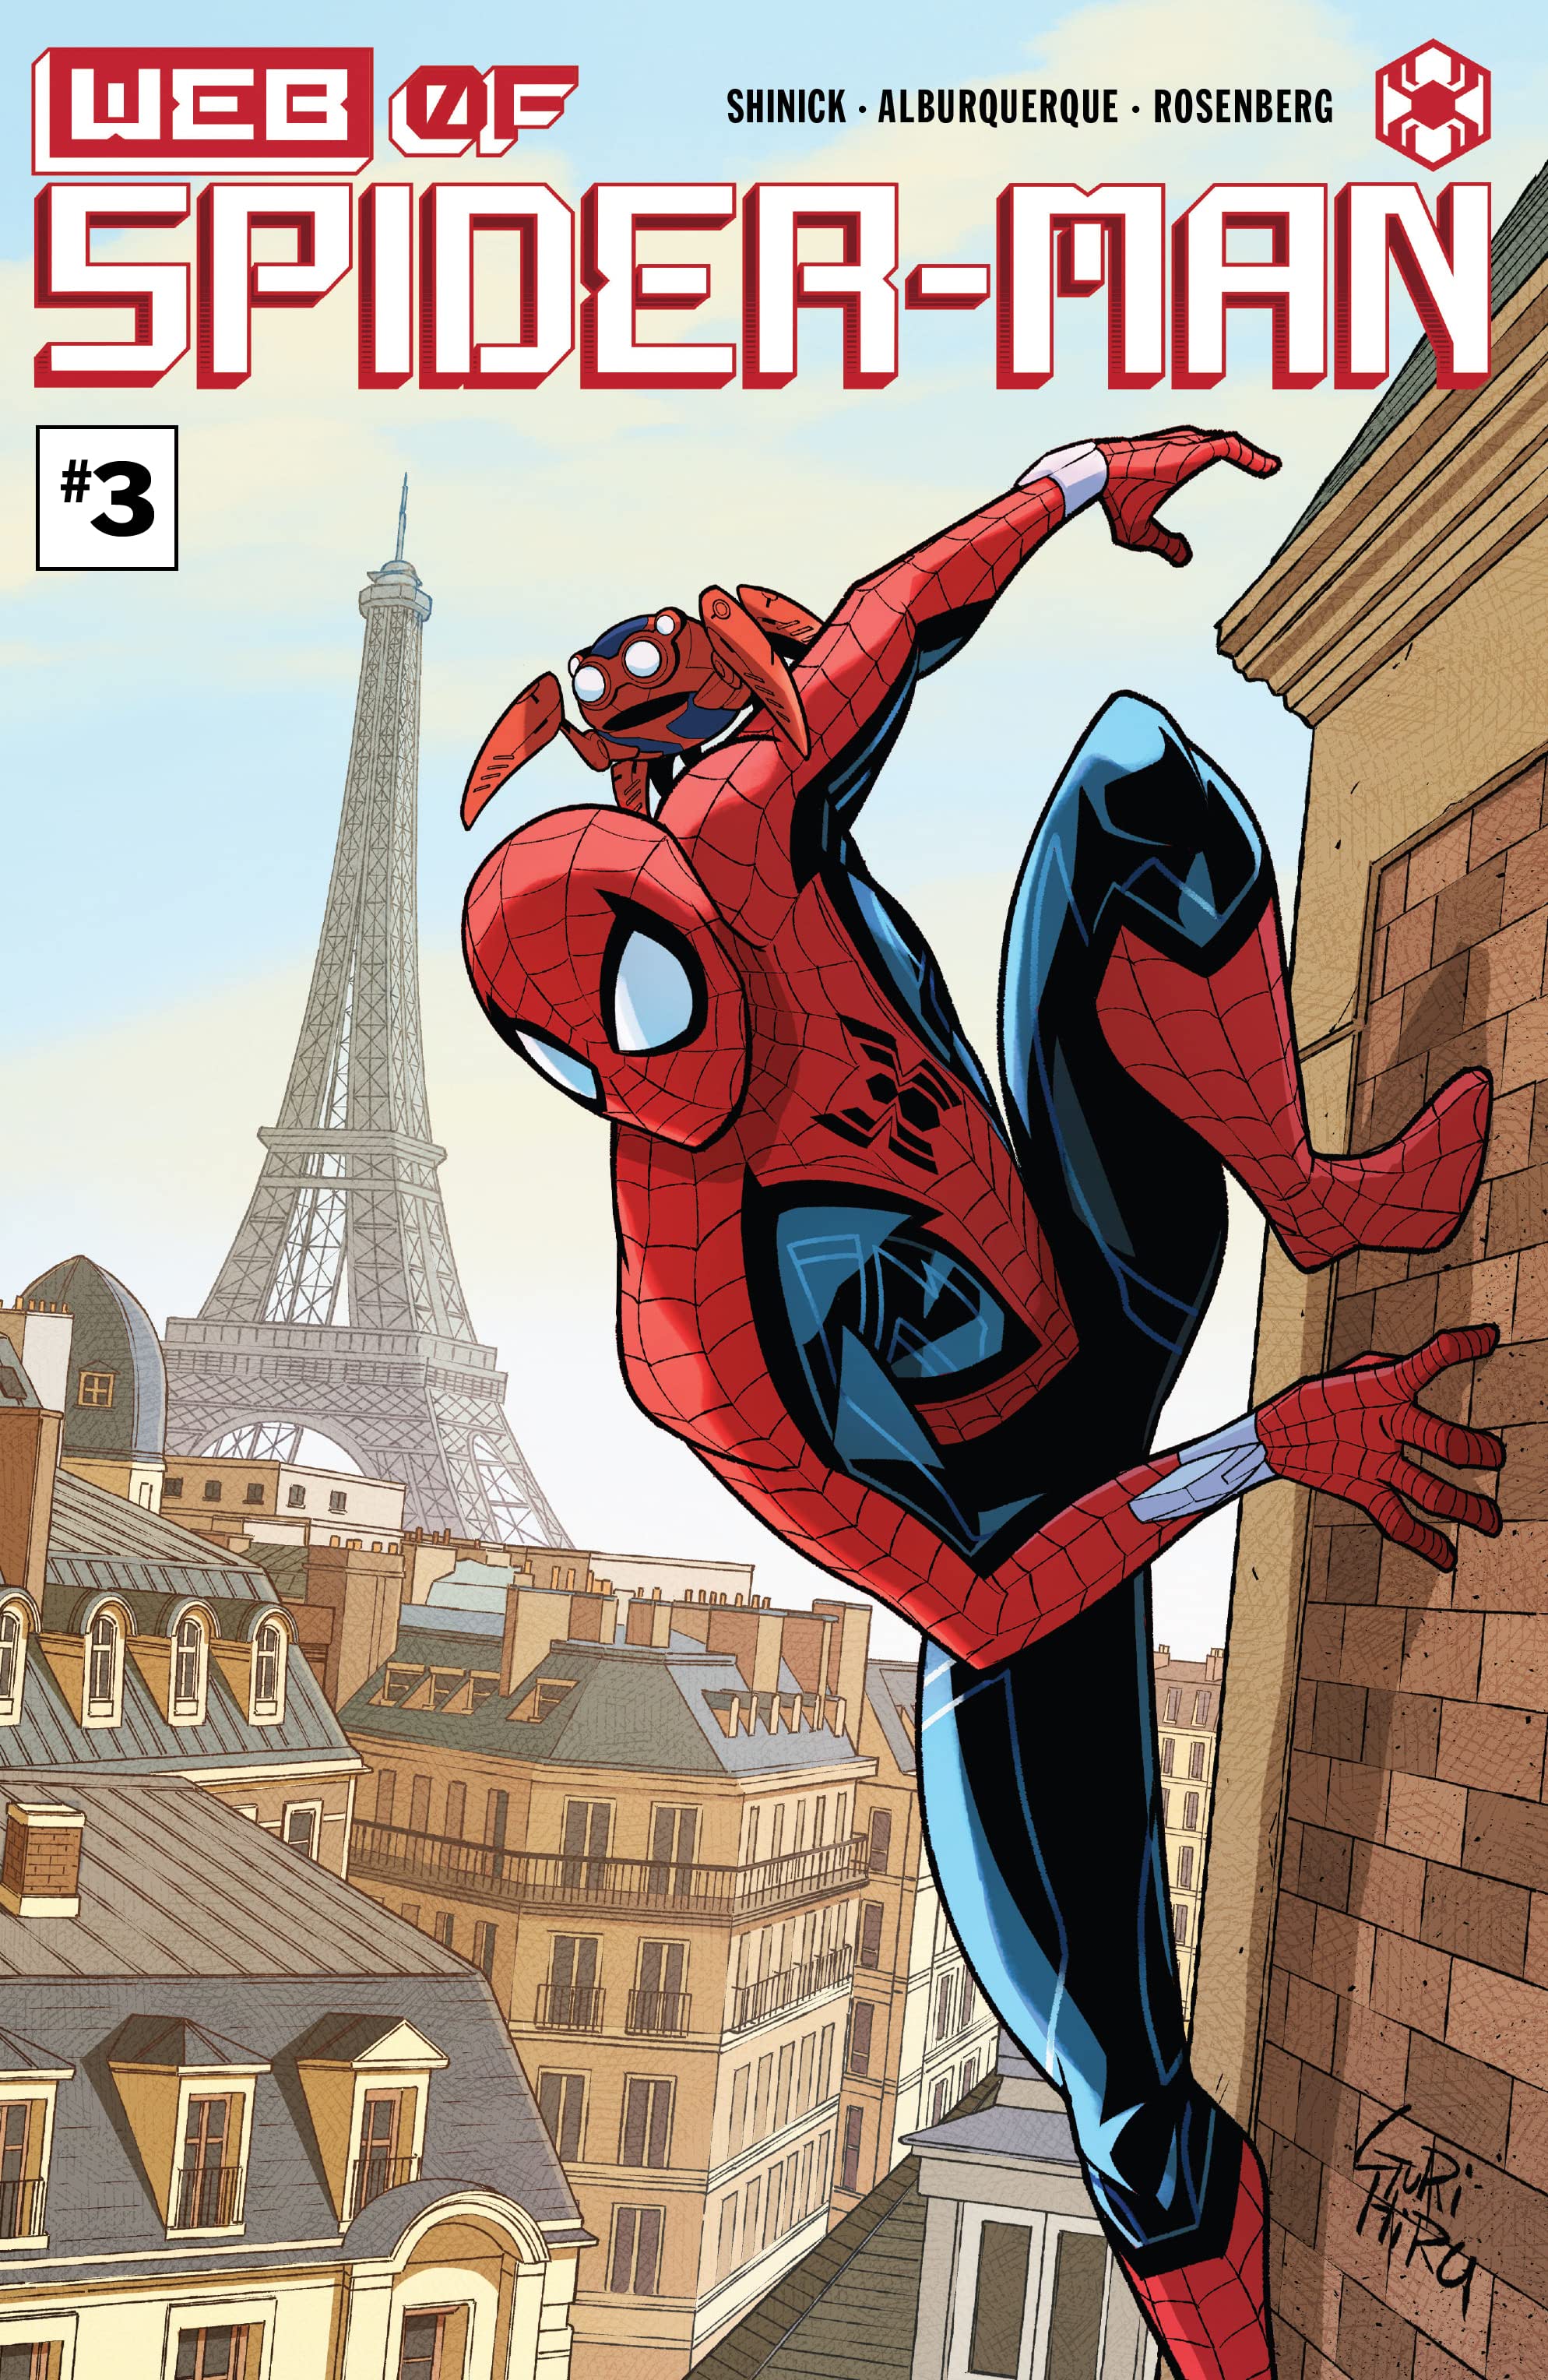 . of Spider-Man Vol 1 3 | Marvel Wiki | Fandom